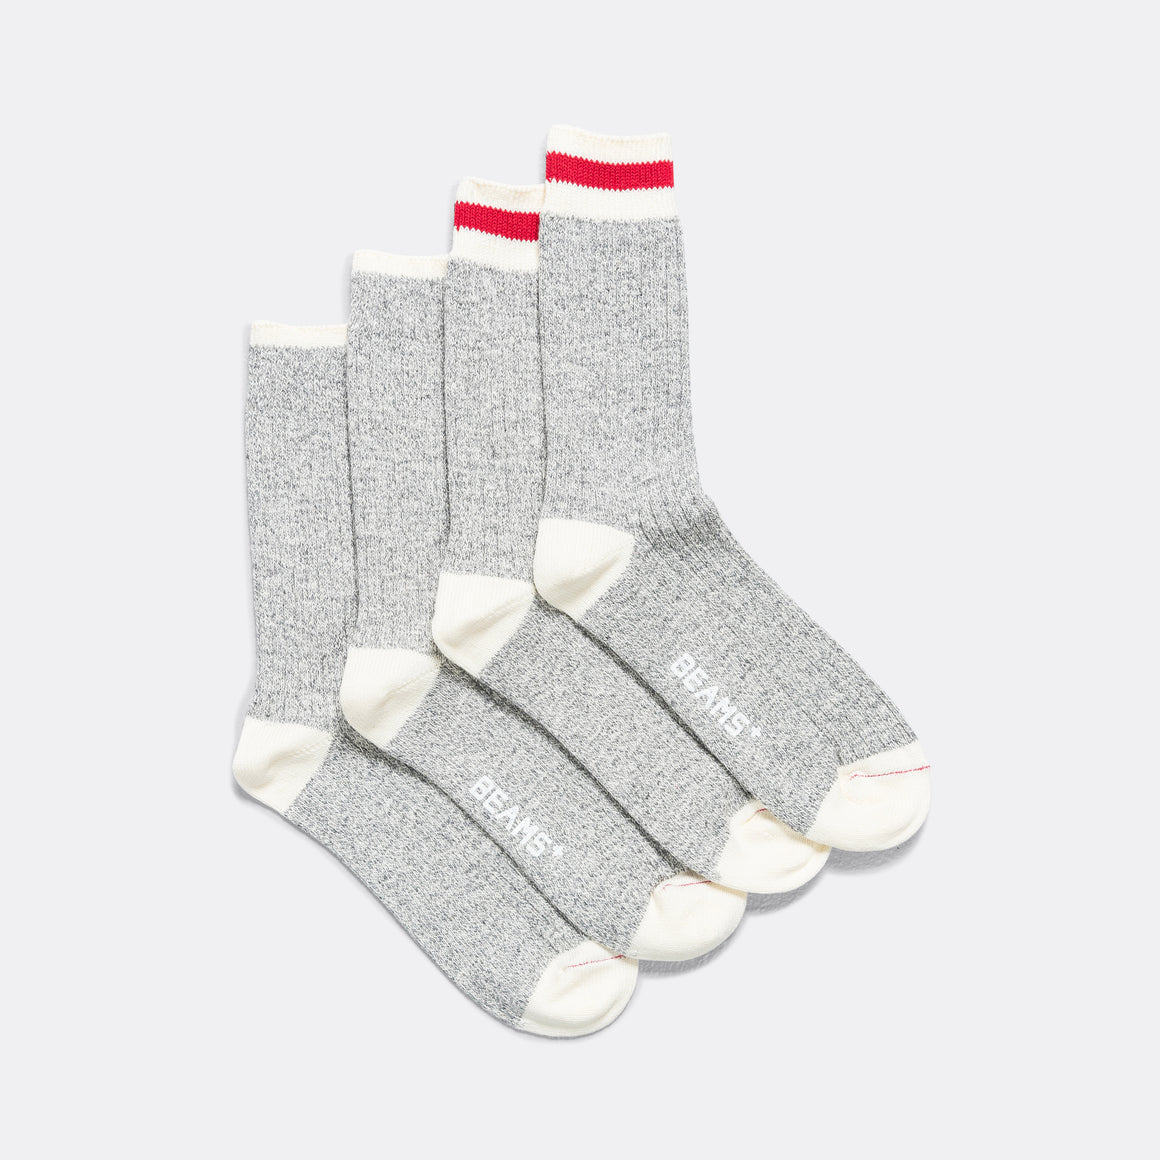 Rag Socks - Grey/Red